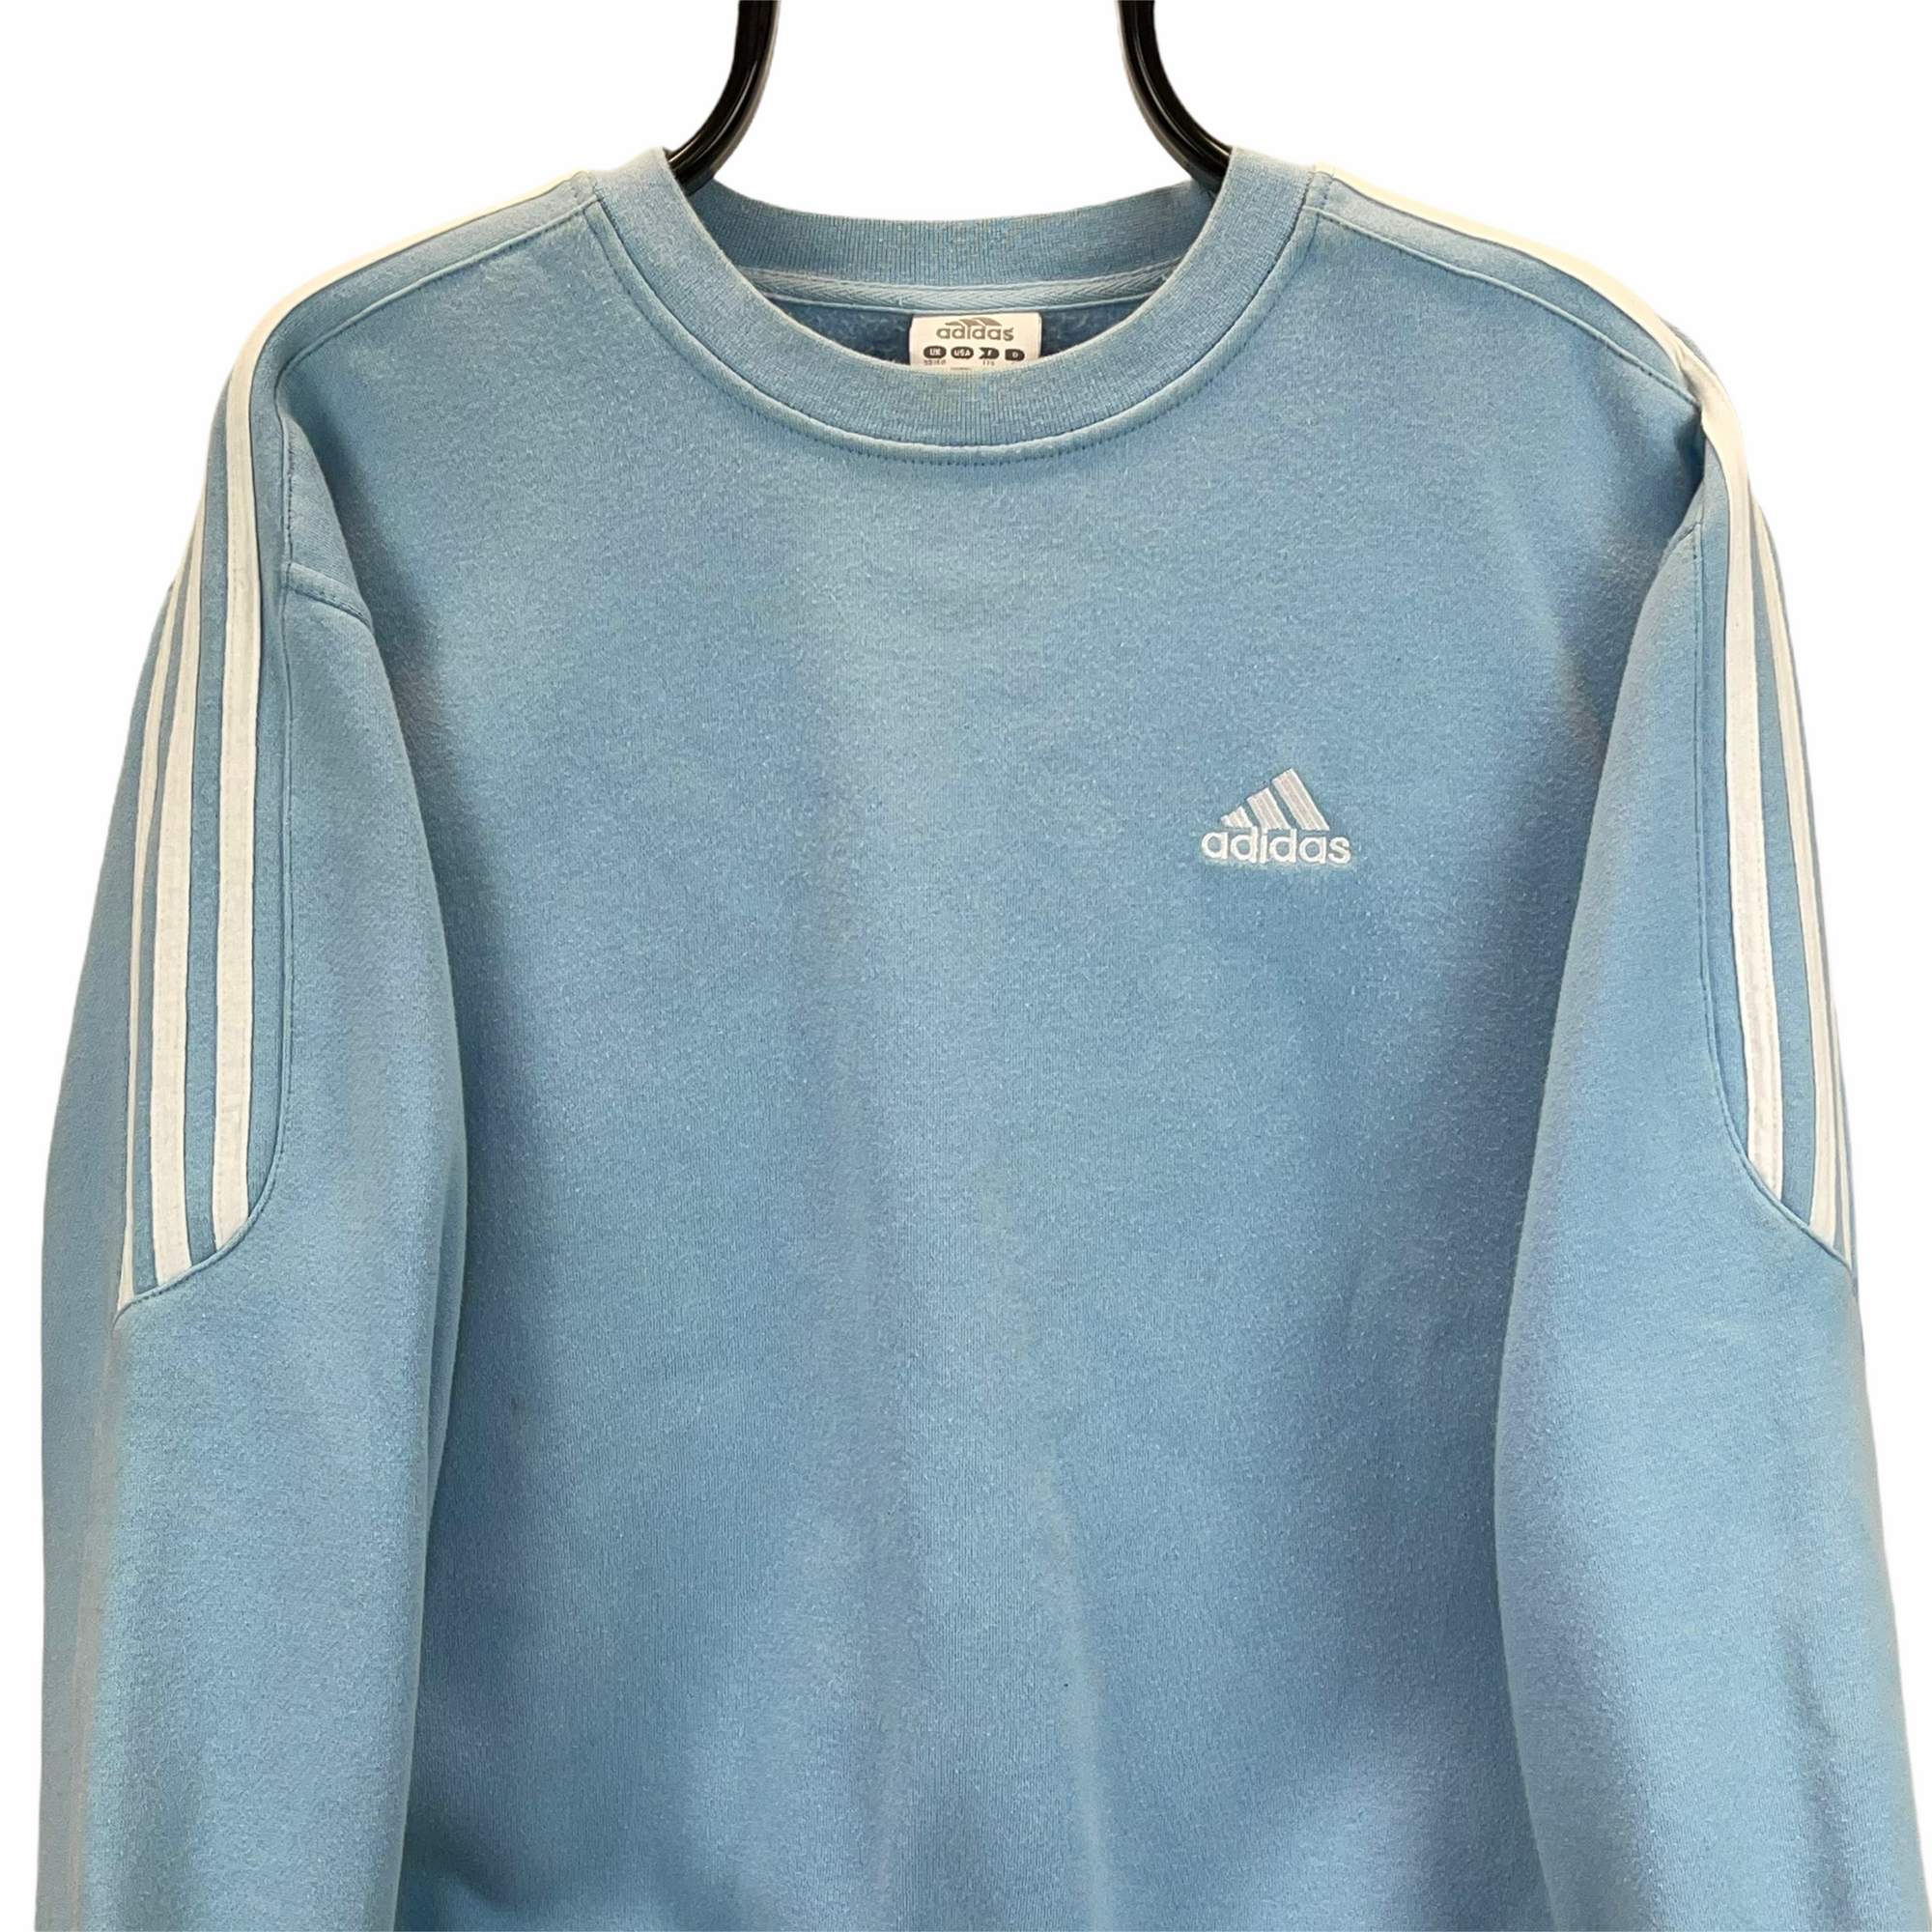 Vintage Adidas Embroidered Small Logo Sweatshirt in Baby Blue - Men's Medium/Women's Large